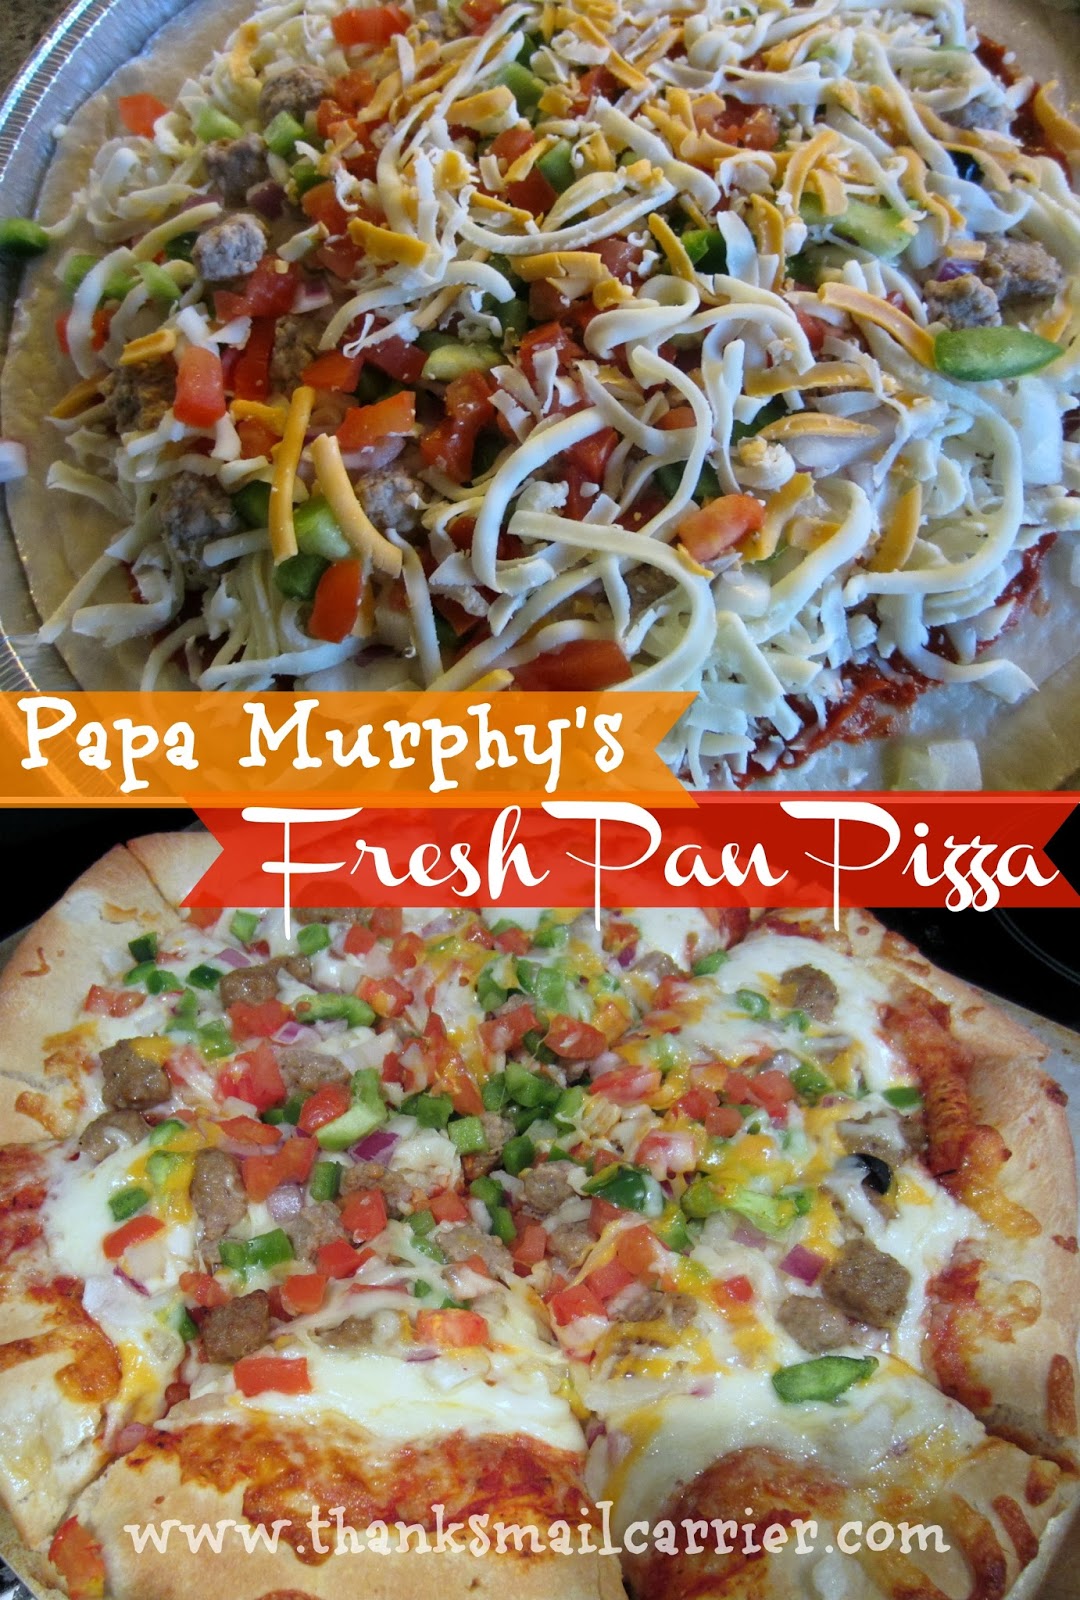 Papa Murphy's Pizza: Freshly Prepared, Ready to Bake - Freshness and Customization